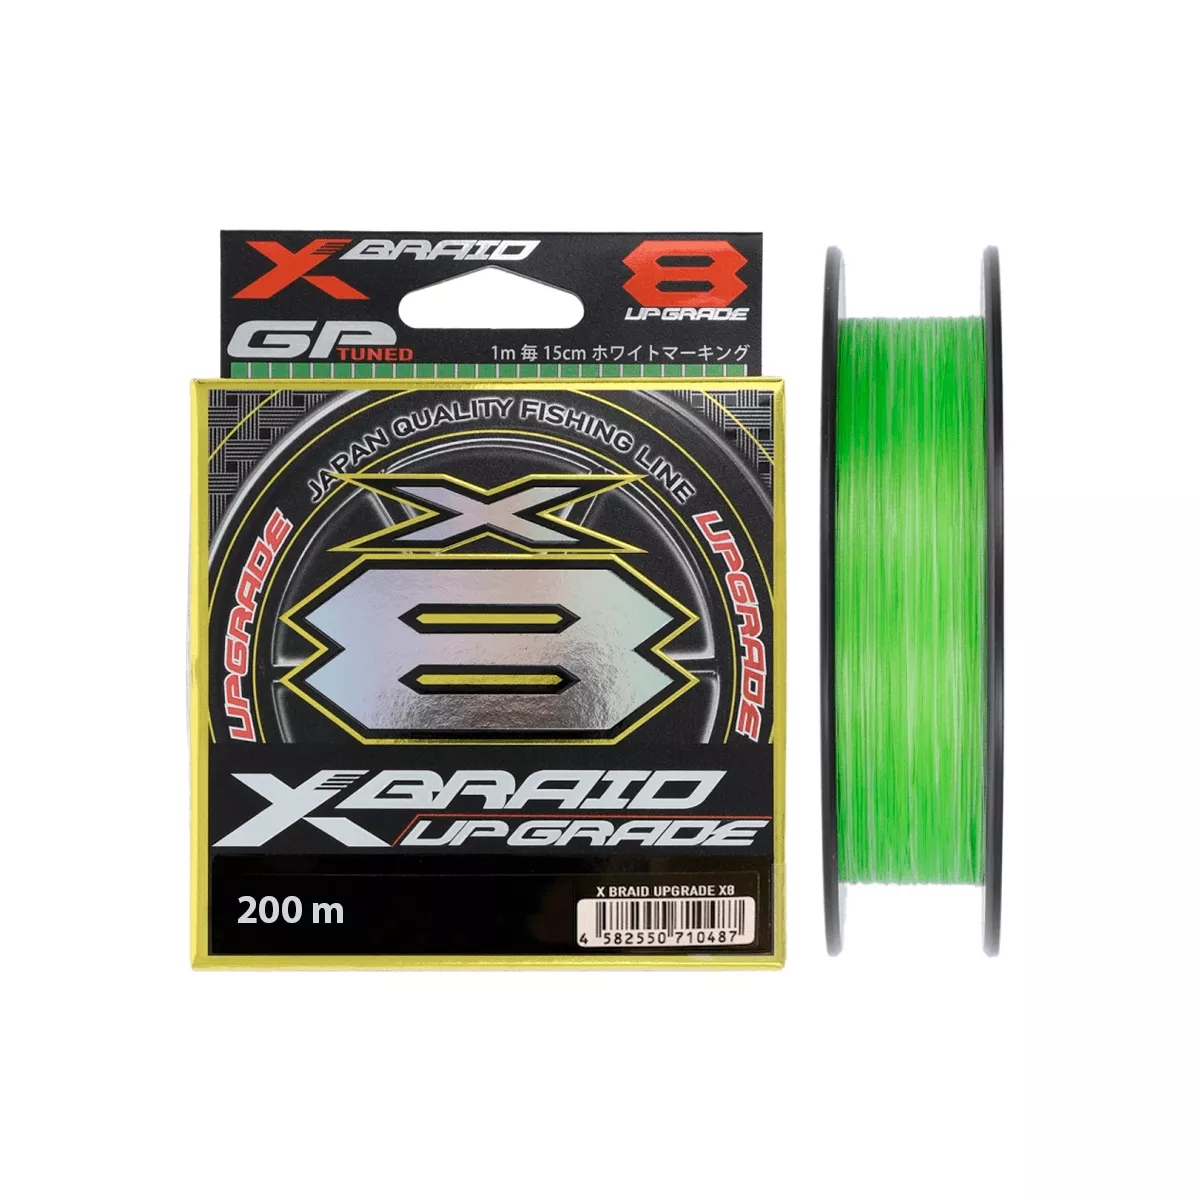 Шнур XBraid Upgrade X8 200м Fluoro Green